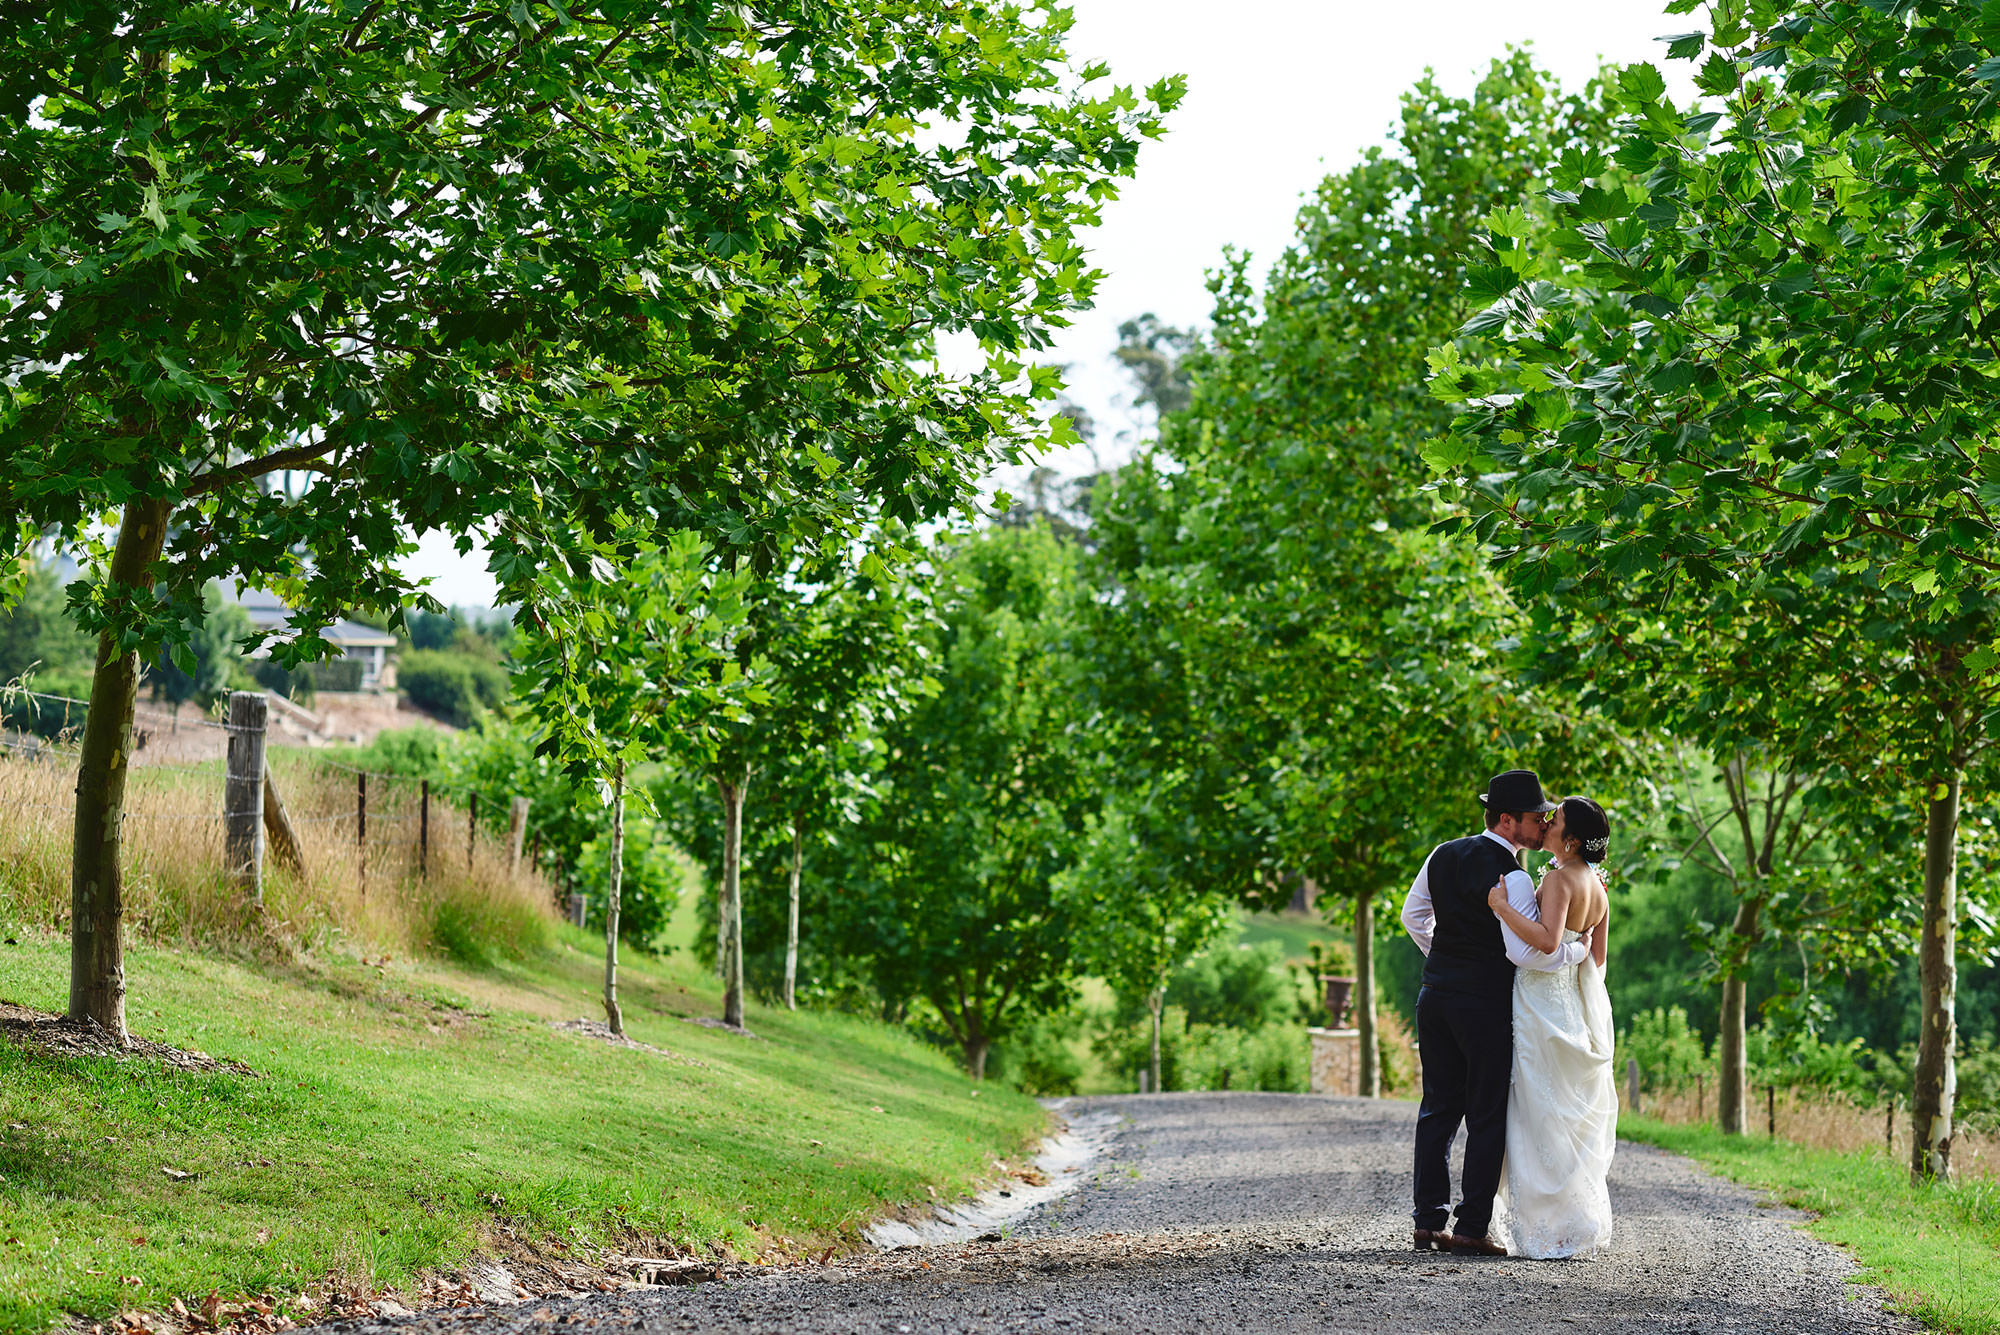 Mali Brae Farm wedding photography kiss in driveway